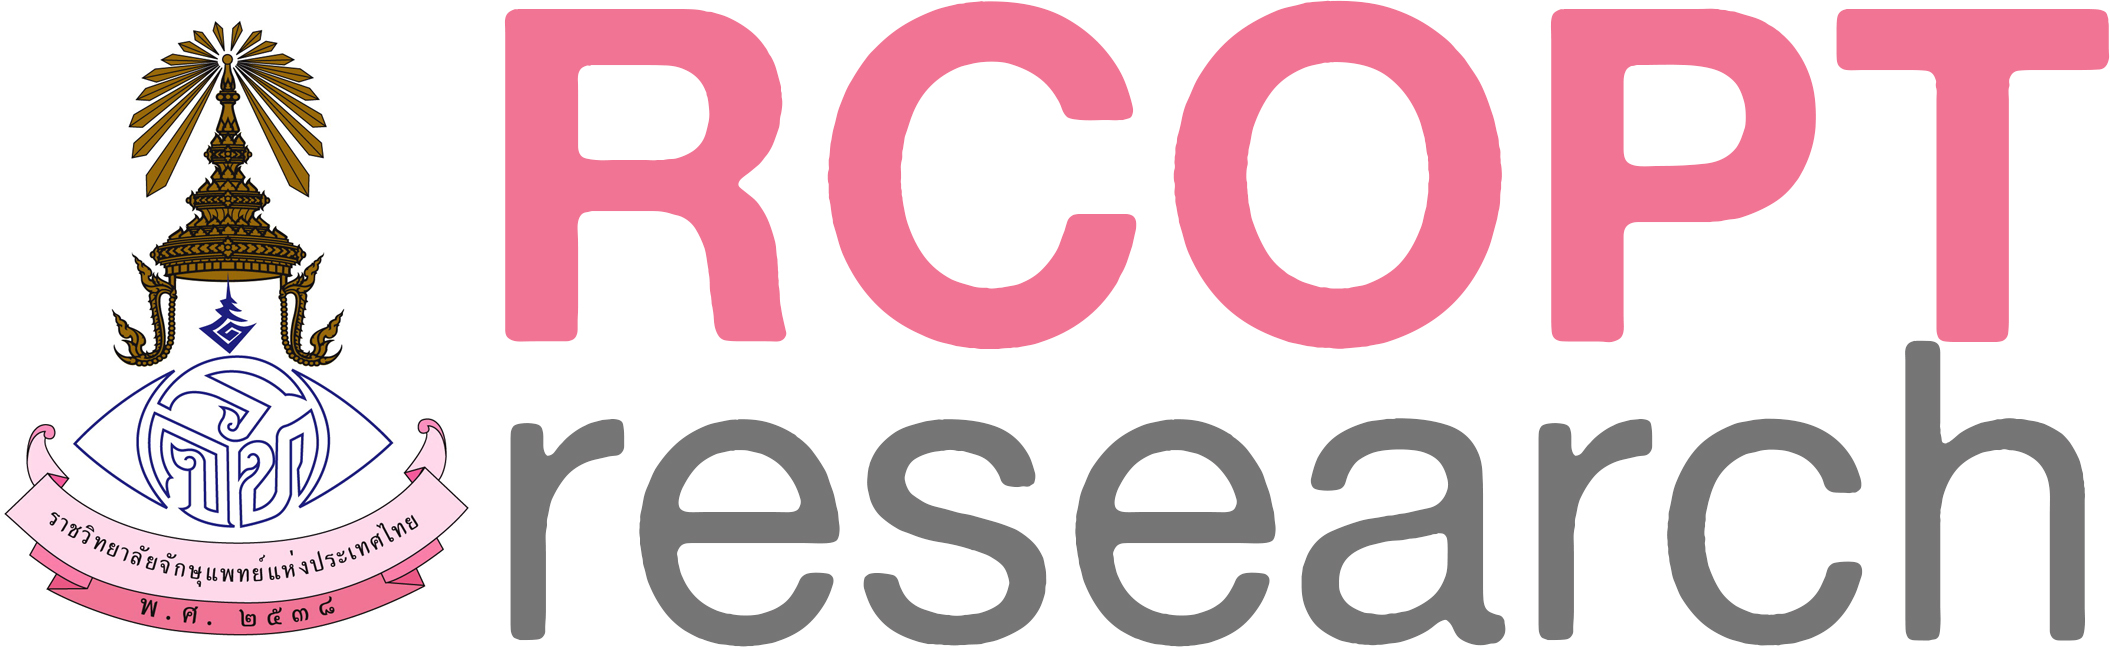 2116RCOPT research logo1.jpg